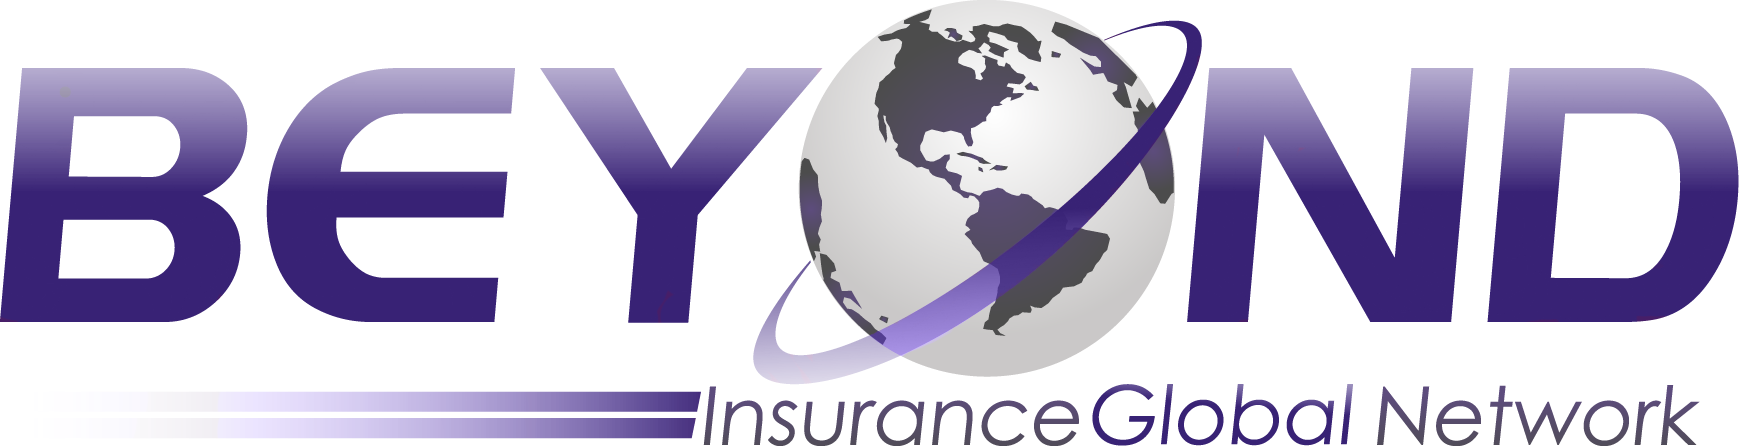 Beyond Insurance Global Network logo